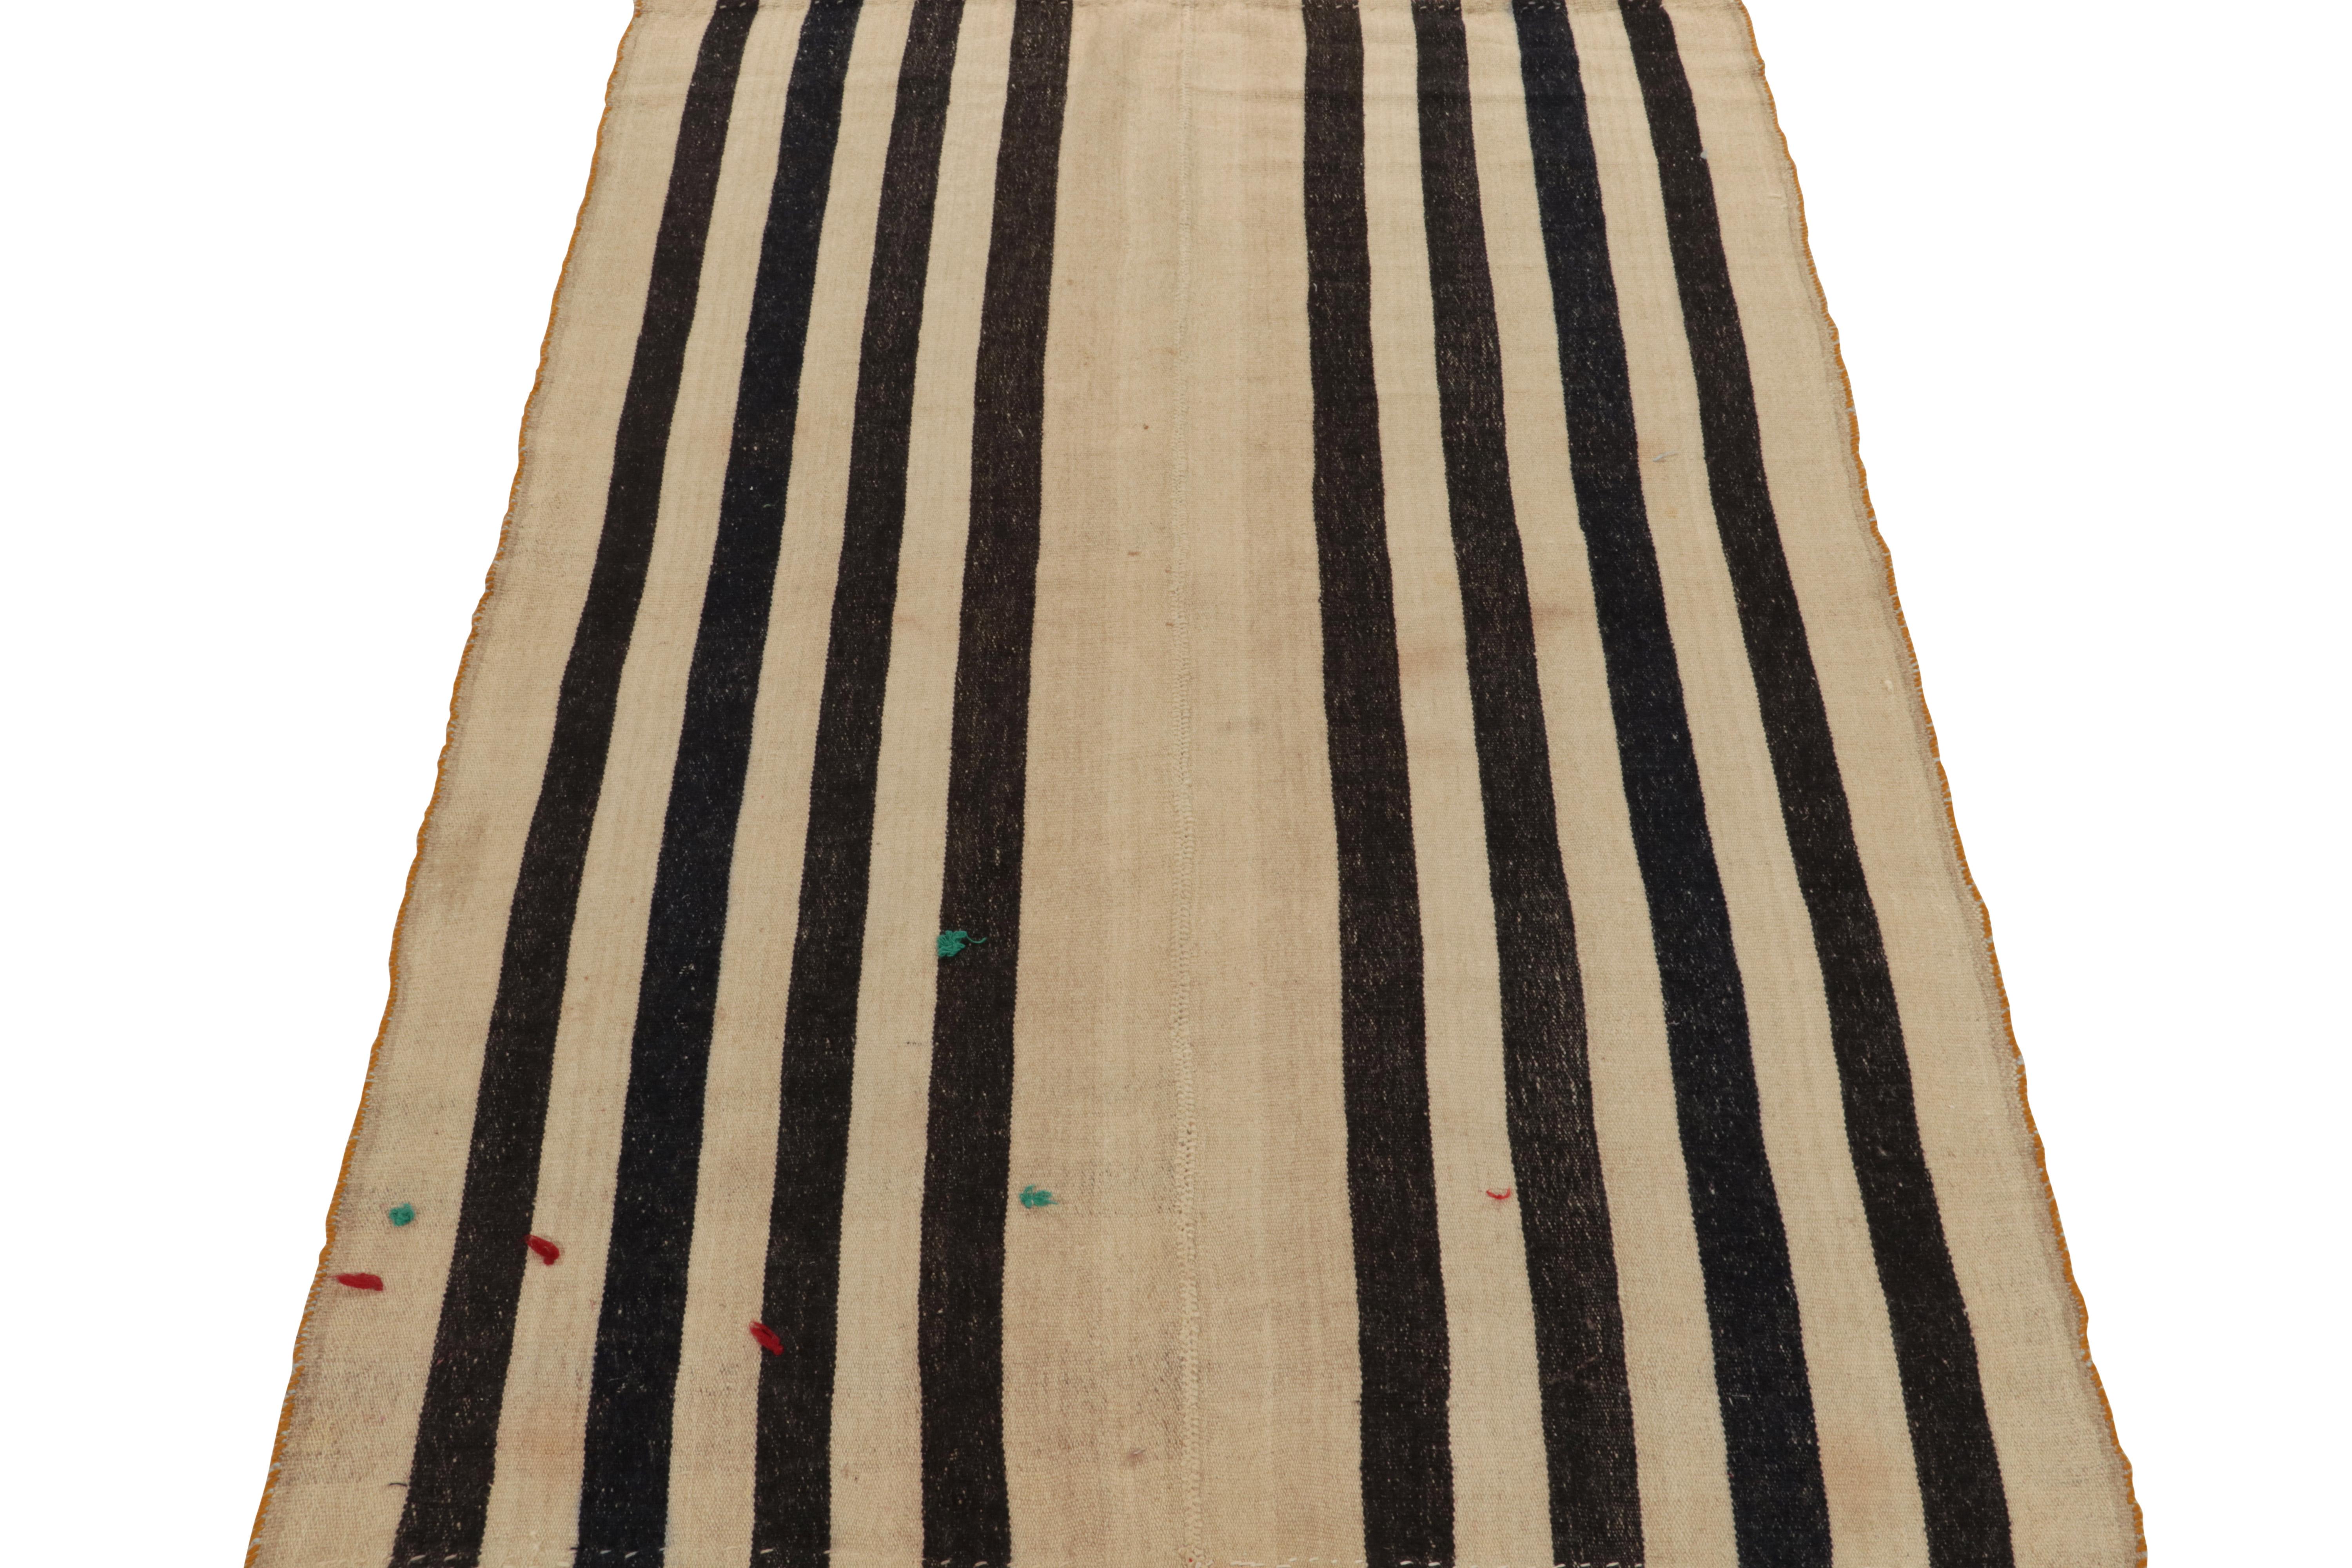 Hand-Knotted Vintage Turkish Kilim Rug in Beige-Brown & Black Stripe Pattern by Rug & Kilim For Sale